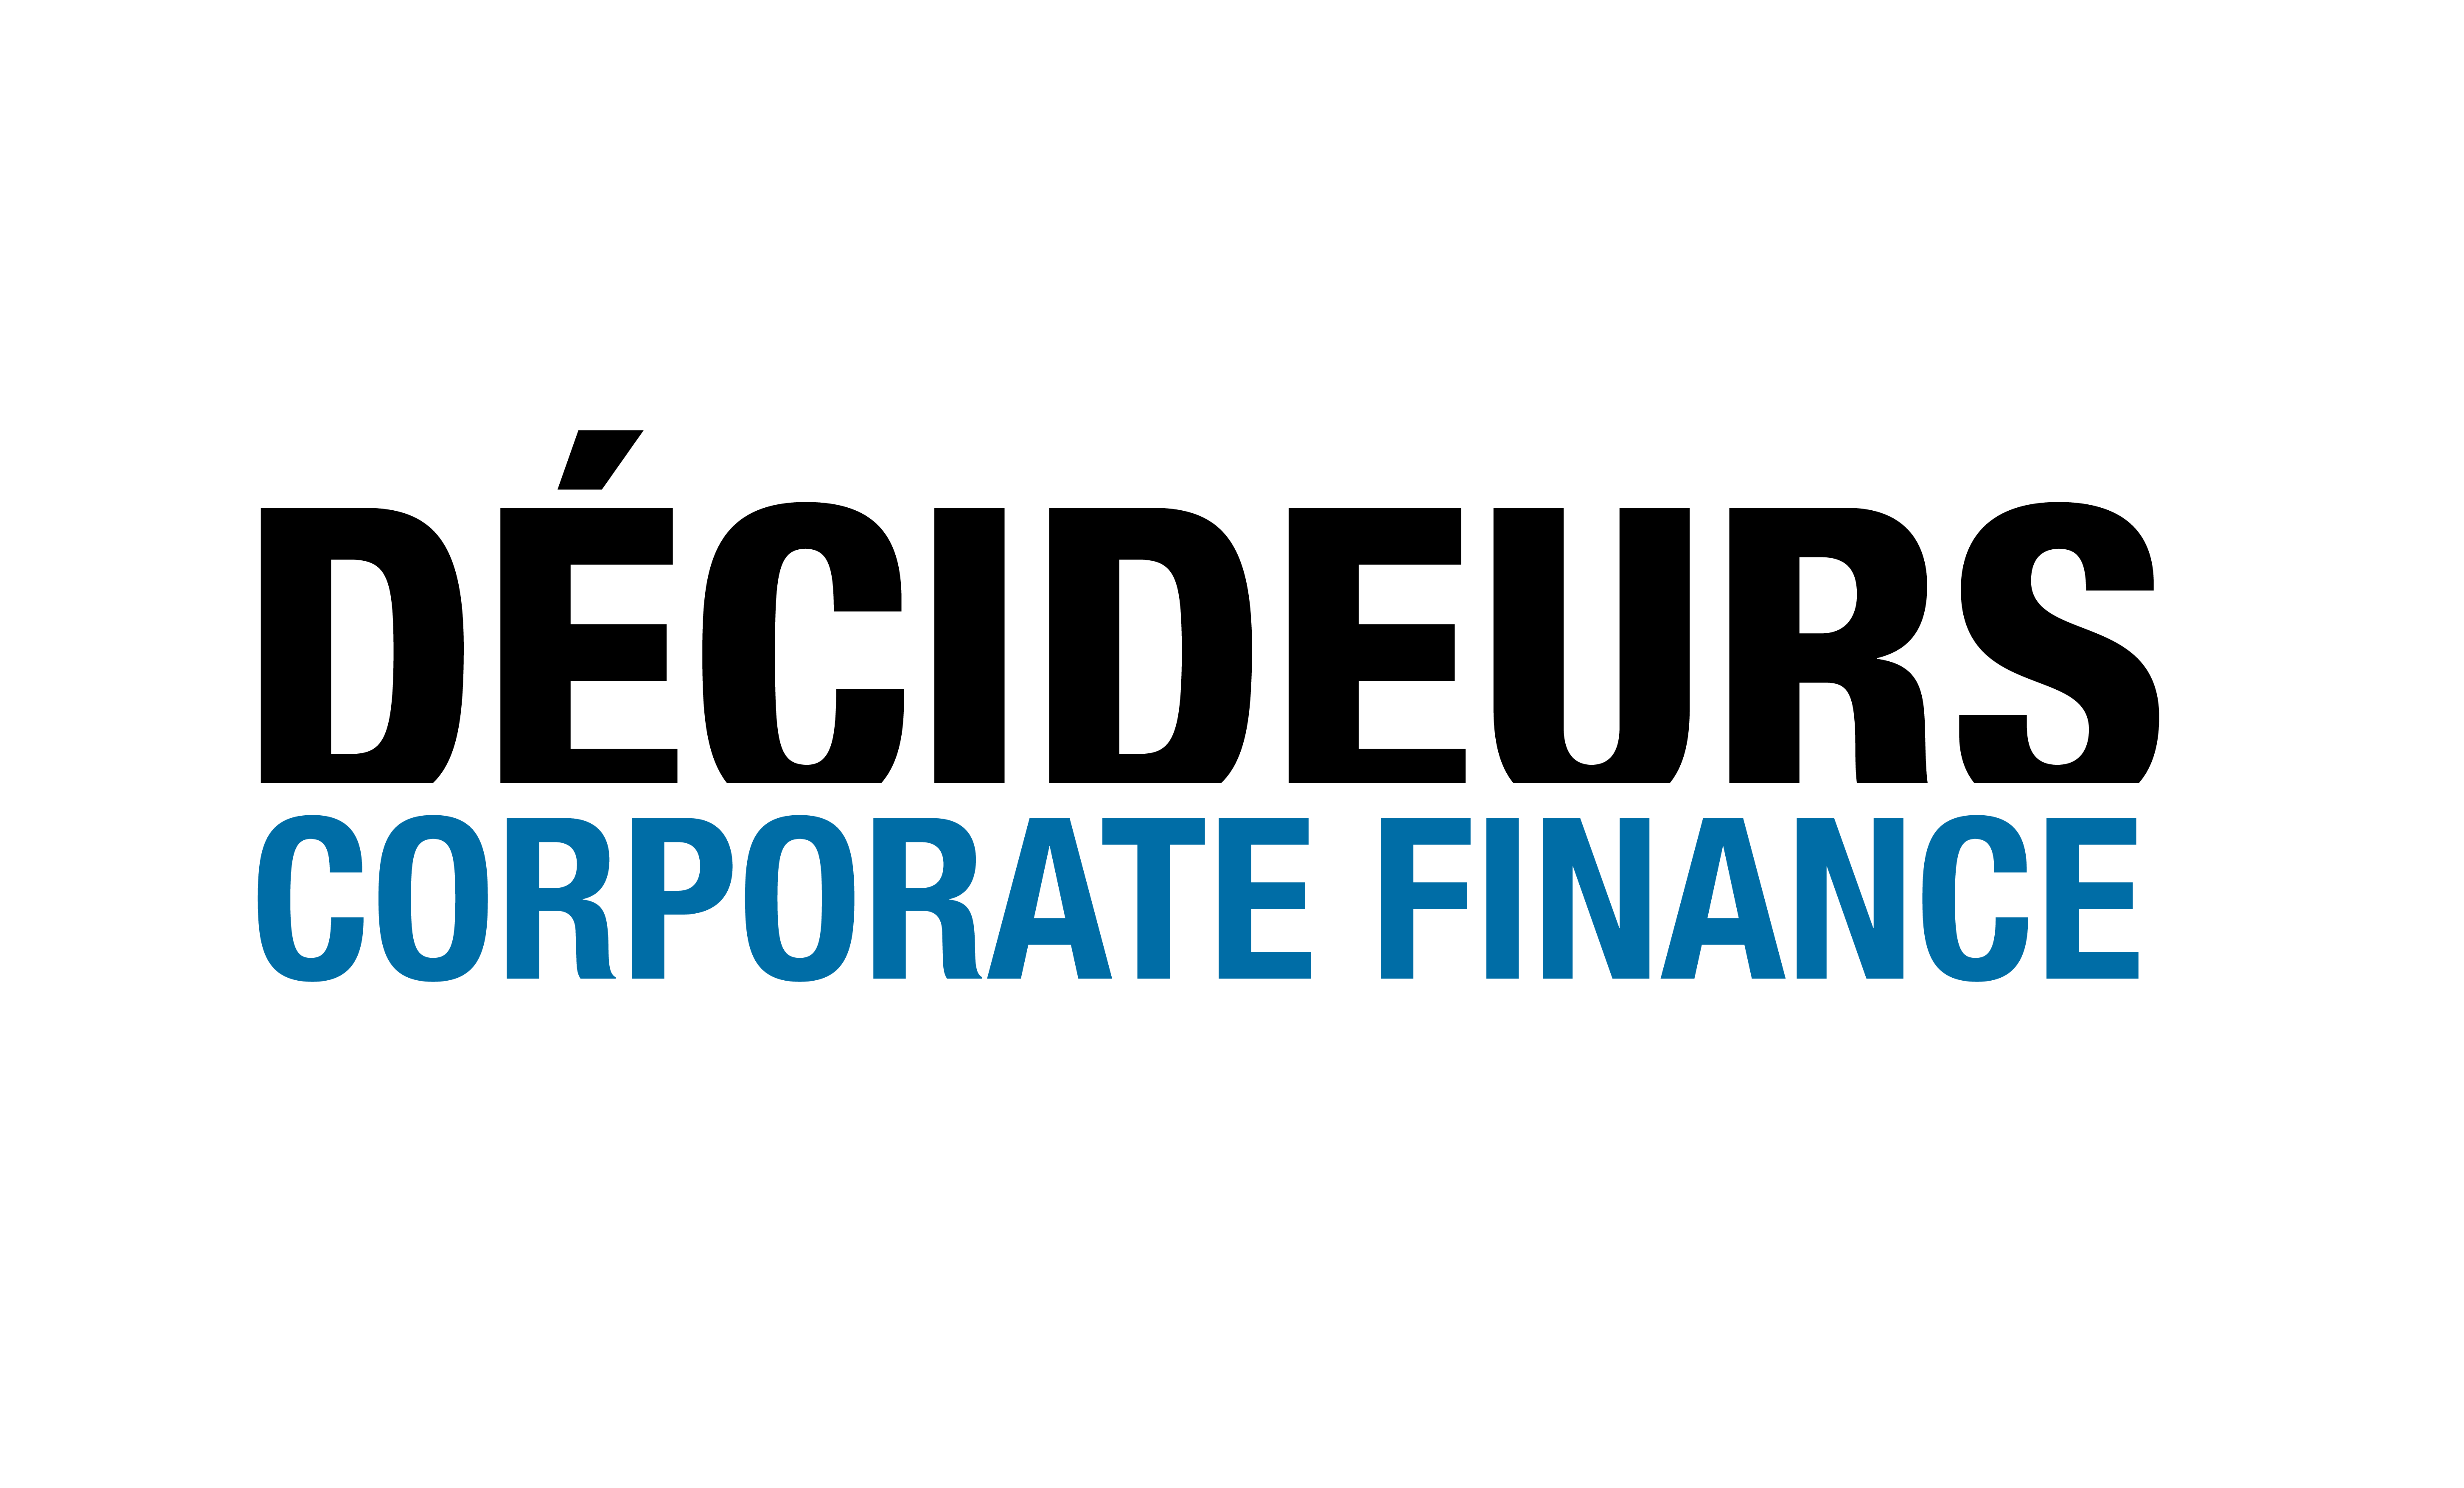 Décideurs Corporate Finance